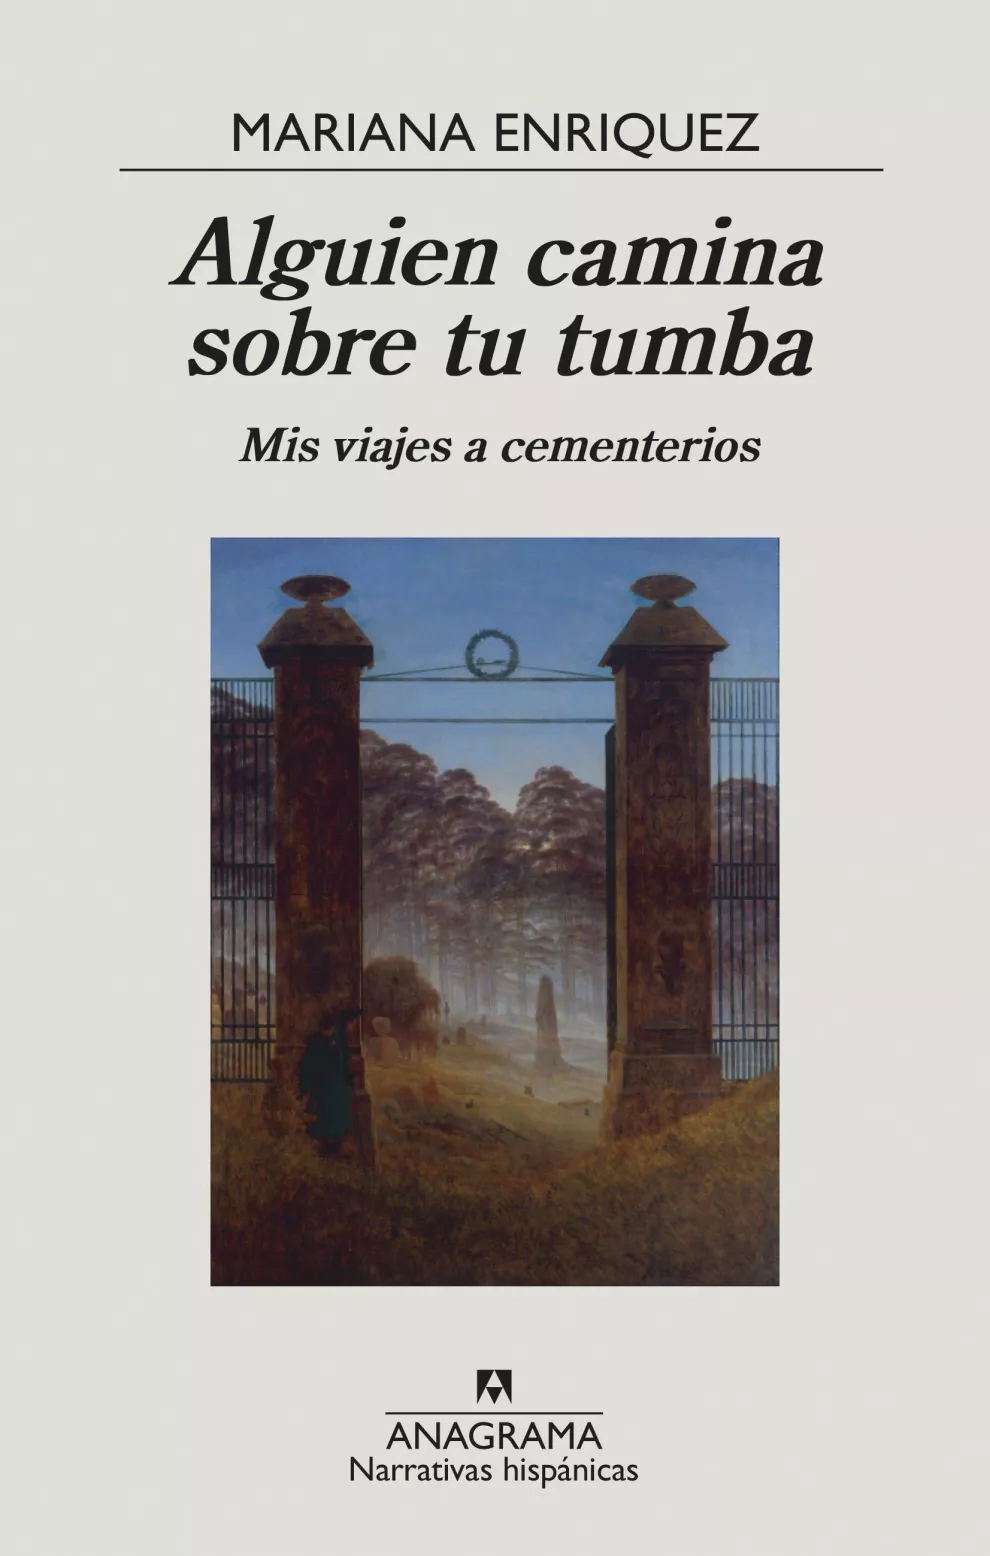 "Alguien camina sobre tu tumba. Mis viajes a cementerios" de Mariana Enriquez